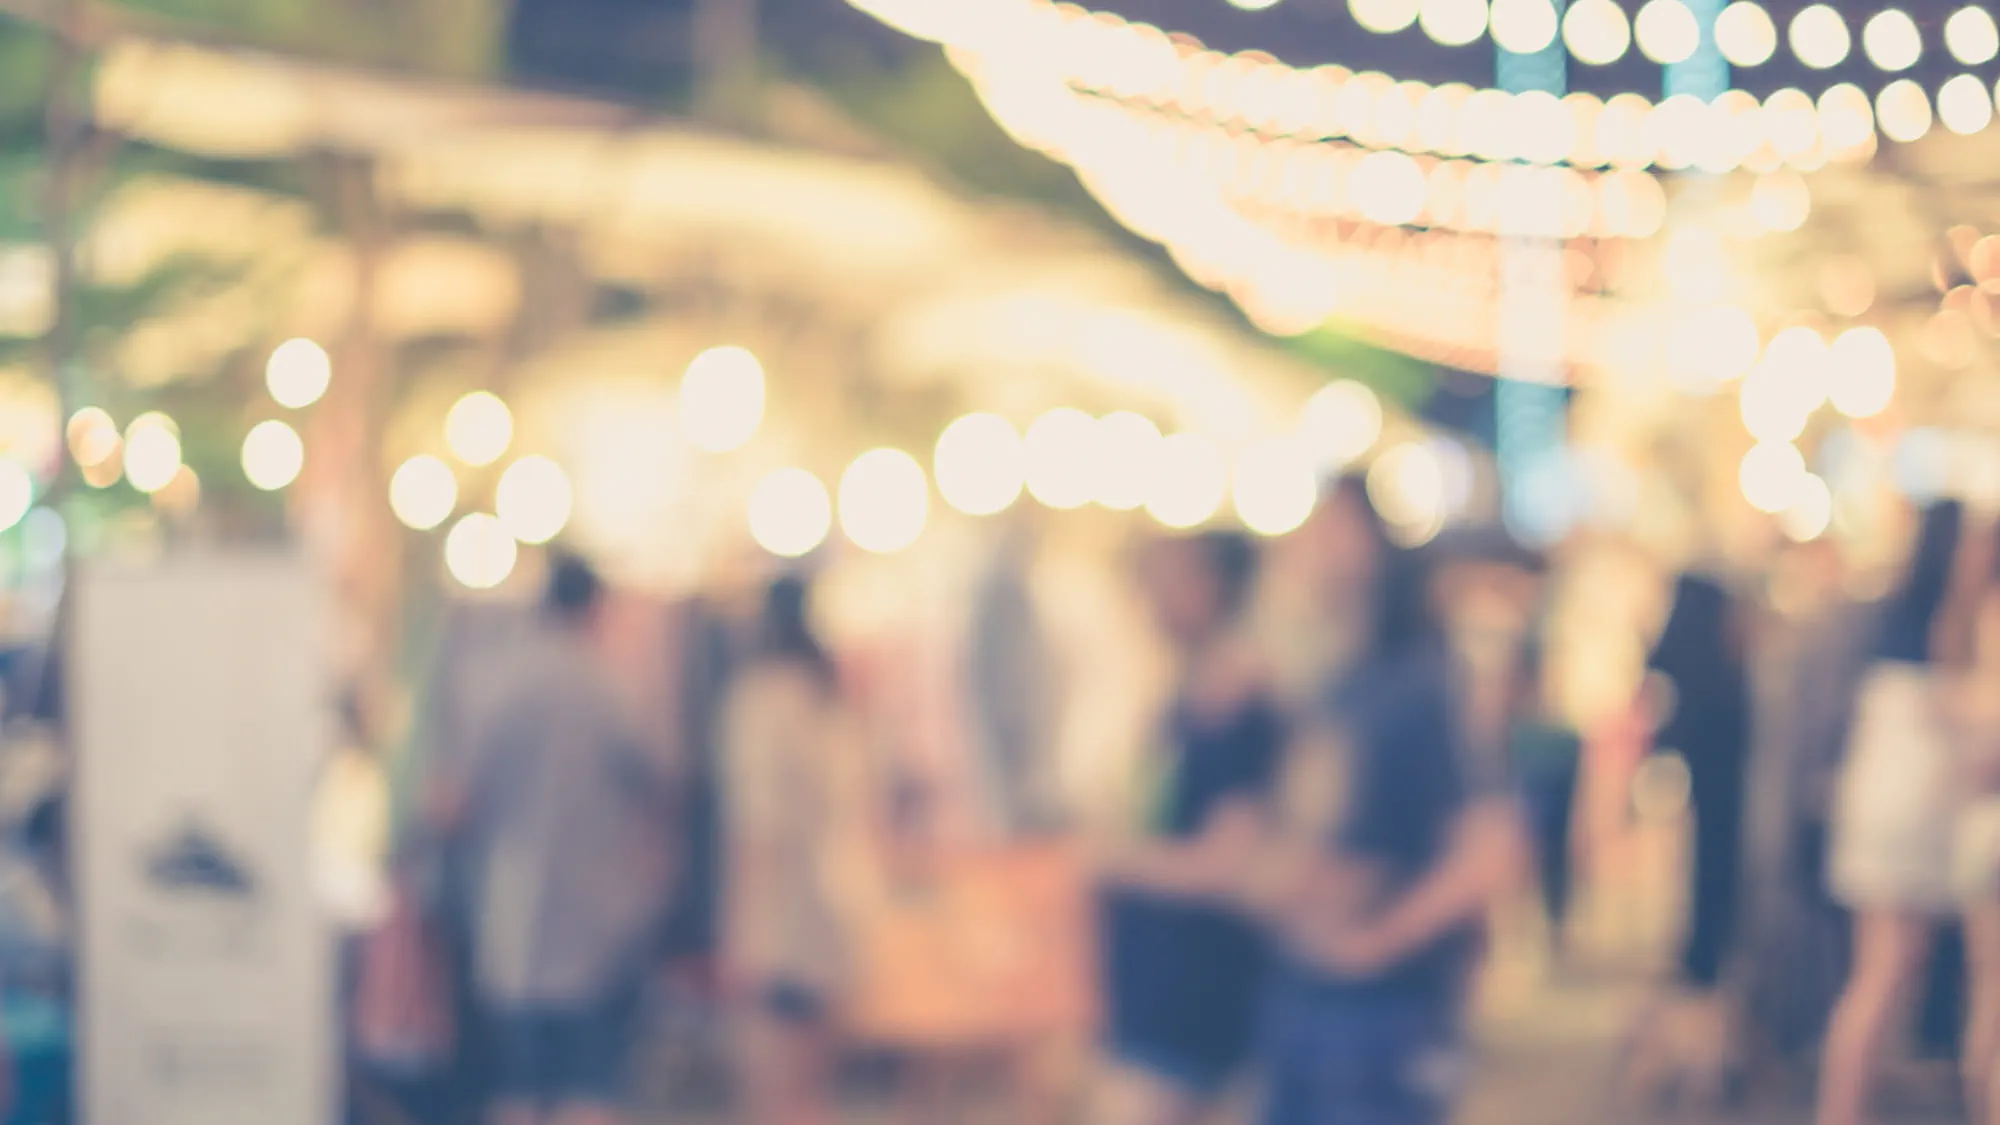 Blurred photgraph of people enjoying a night market under lights